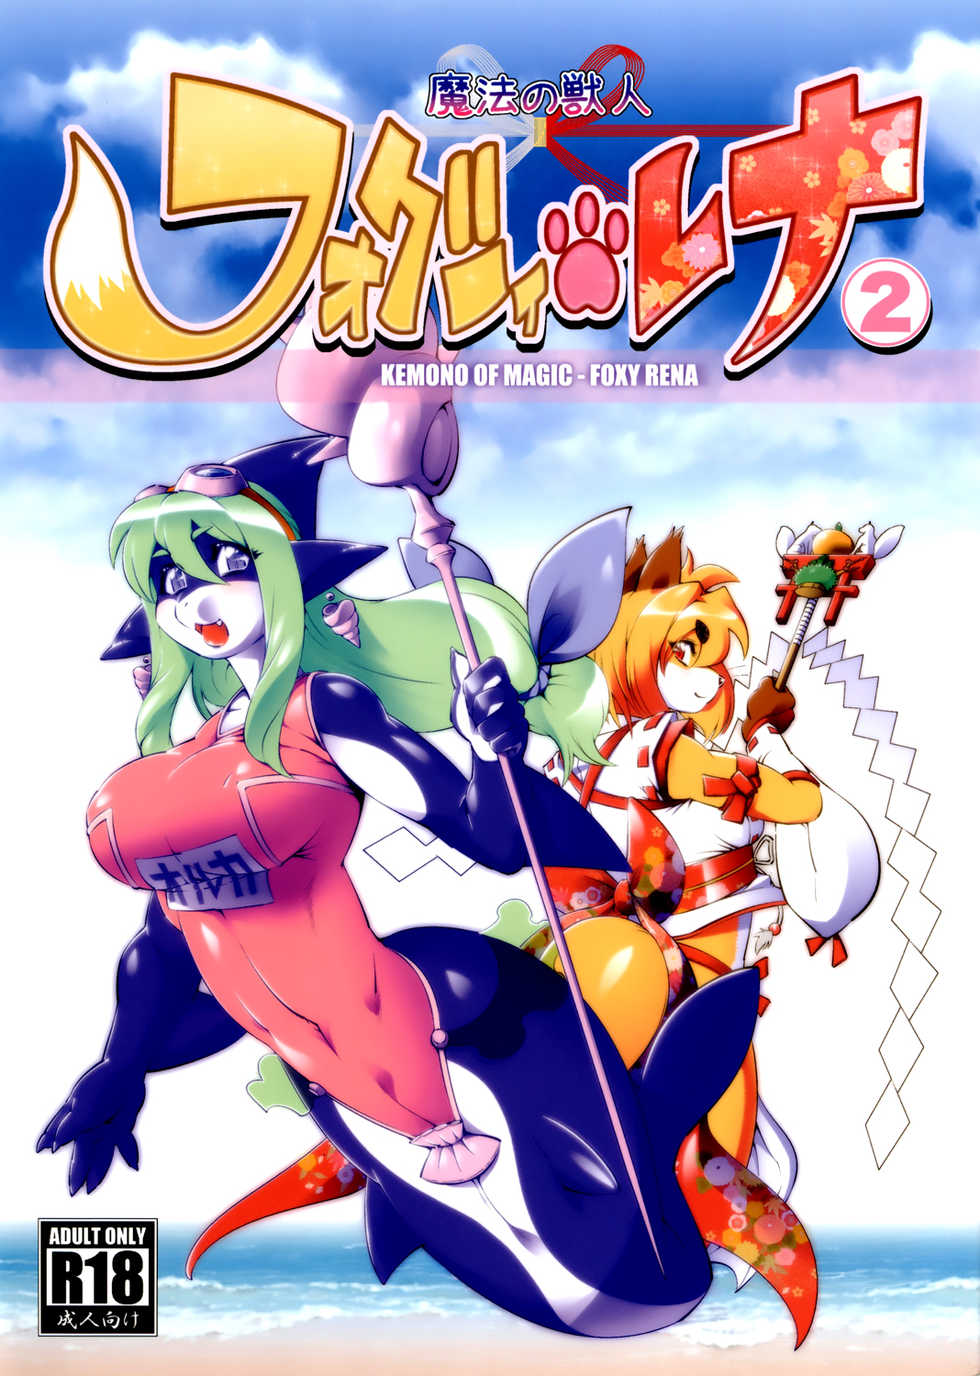 [Sweet Taste (Amakuchi)] Mahou no Juujin Foxy Rena 2 - Kemono of Magic - Foxy Rena 2 [French] {SAXtrad} [2012-06-01] - Page 1